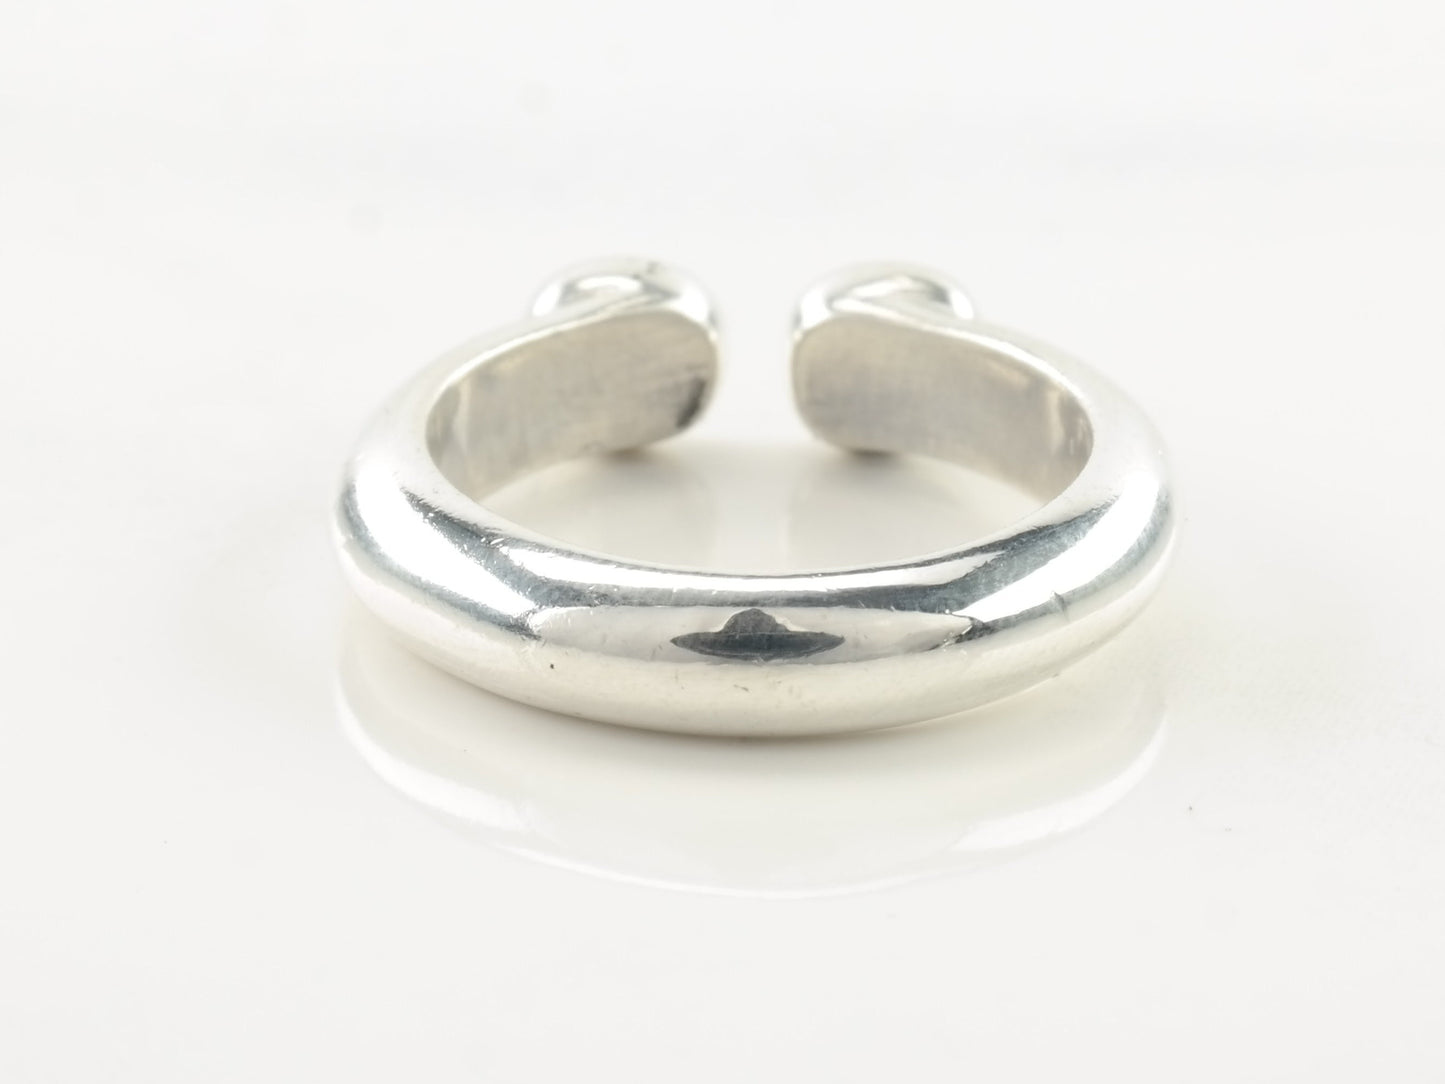 Vintage Links of London Silver Ring Studded Sterling Size 5 3/4